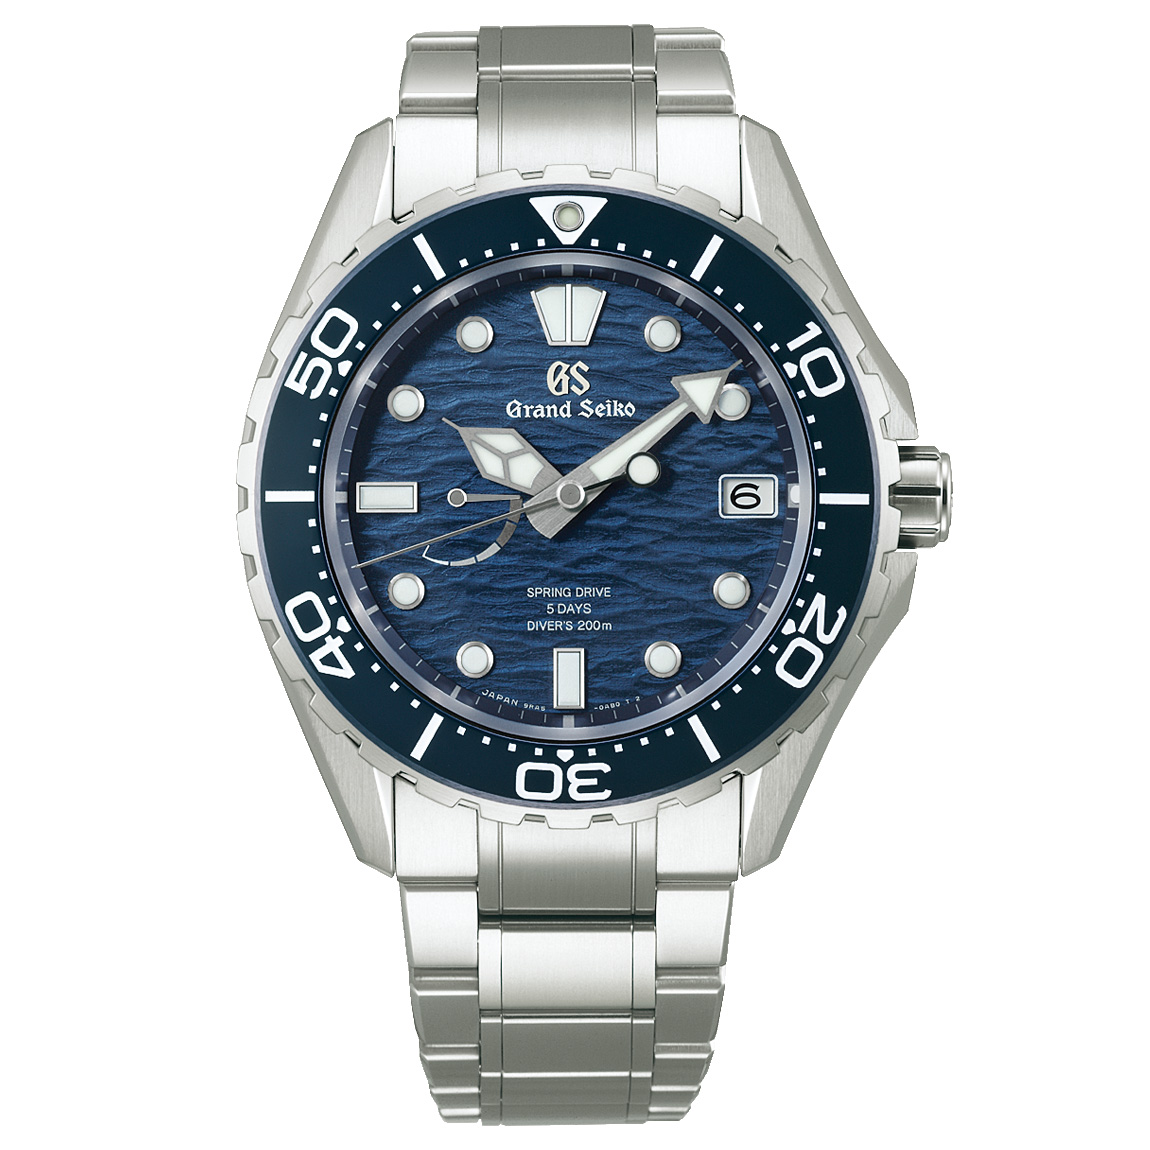 Evolution 9 Spring Drive 5 Days Divers Blue Dial Titanium Watch | 43.8mm | - Grand Seiko SLGA023